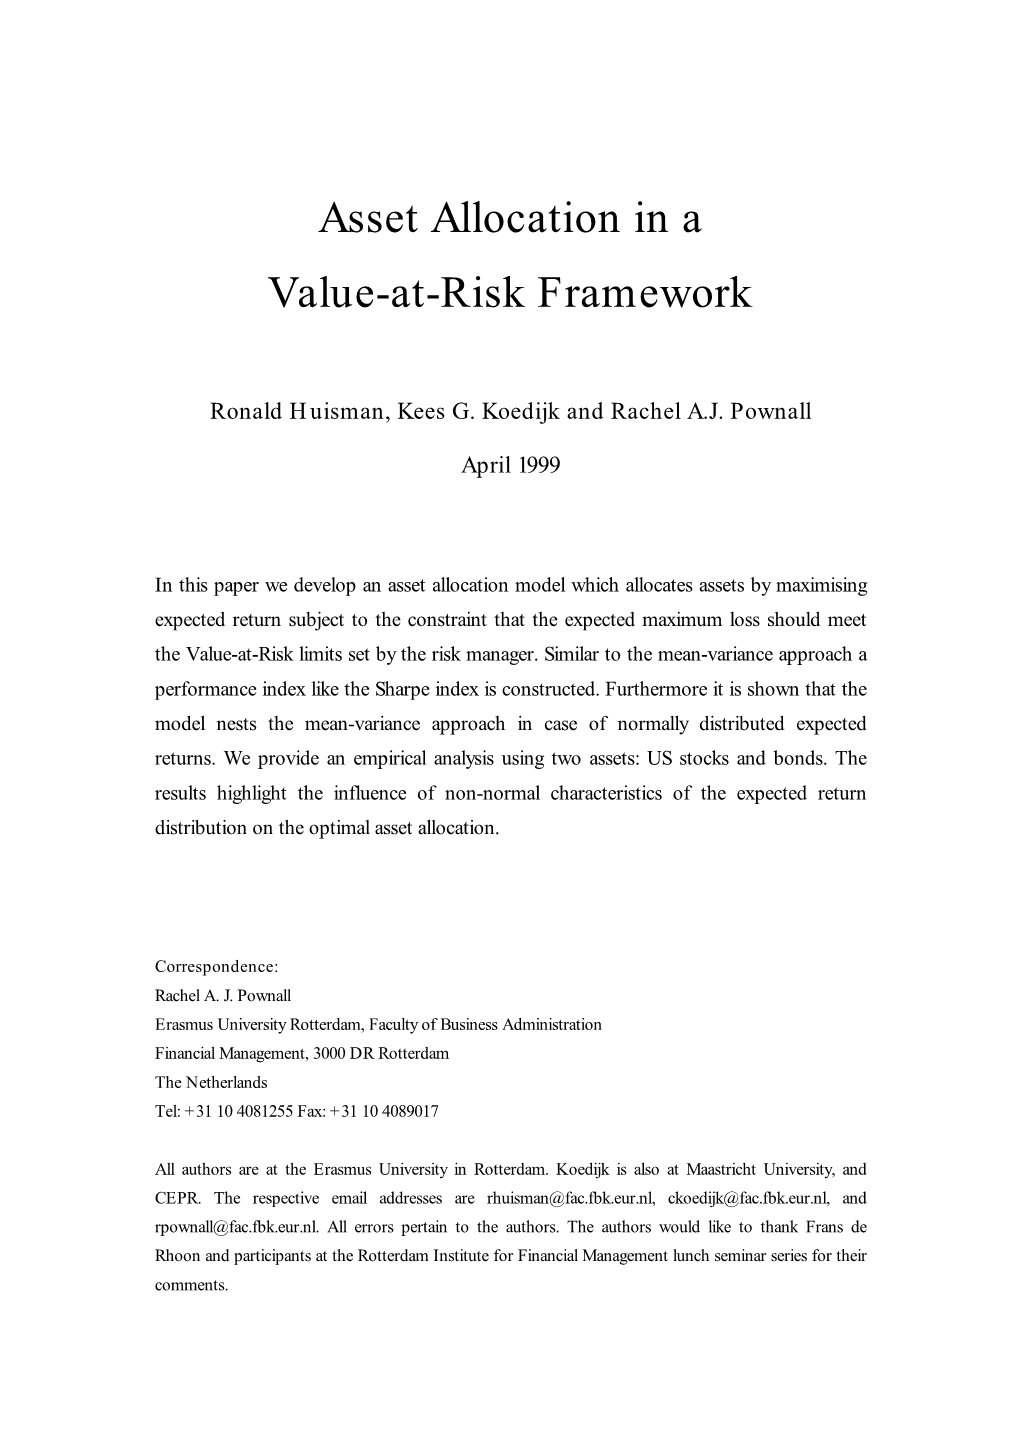 Asset Allocation in a Value-At-Risk Framework